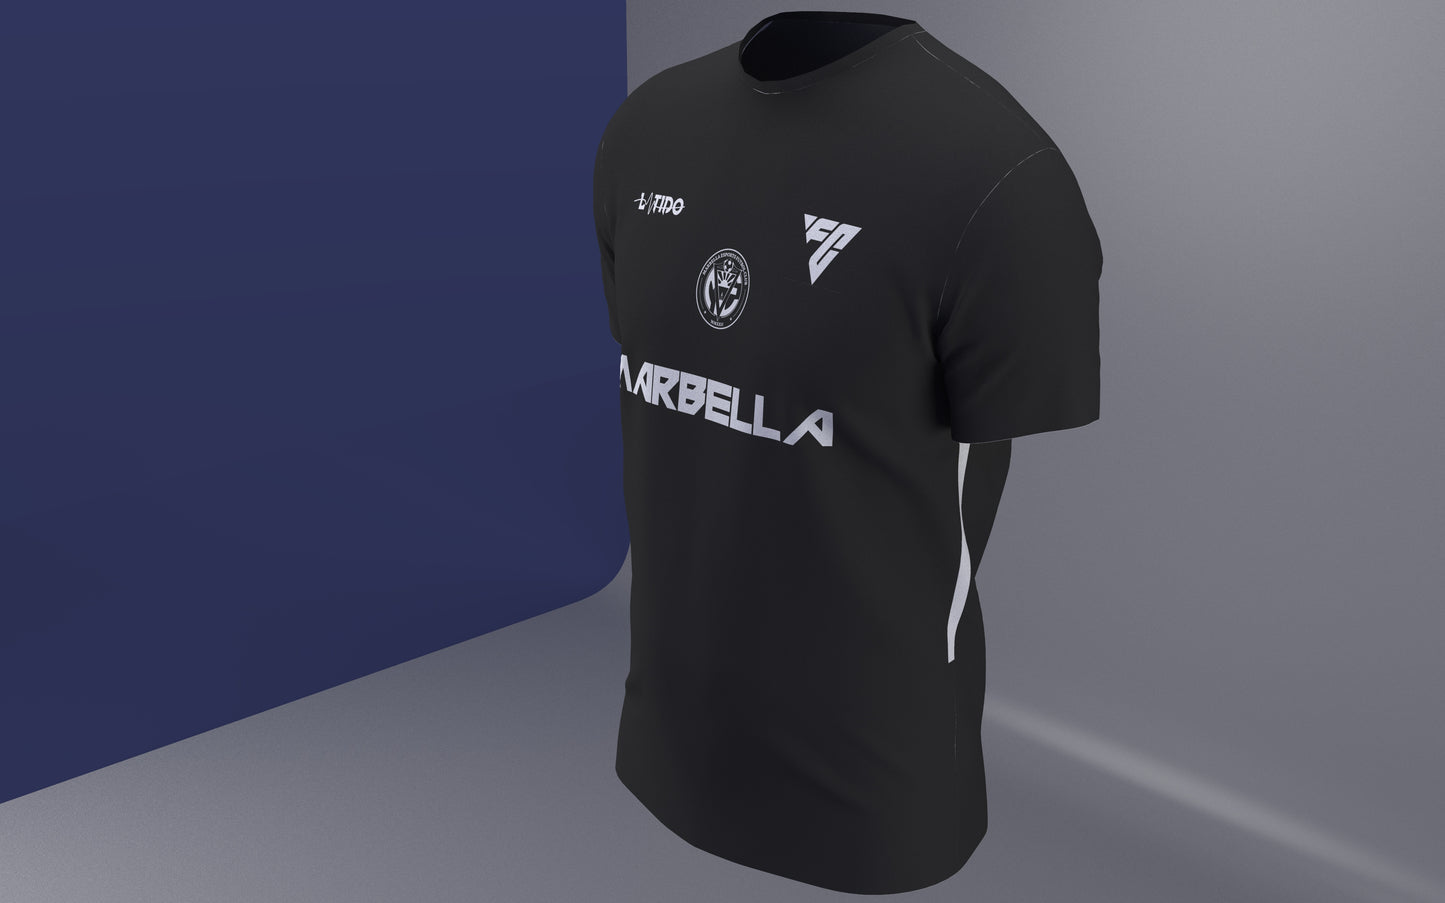 Camiseta de algodón Marbella esports FC negra